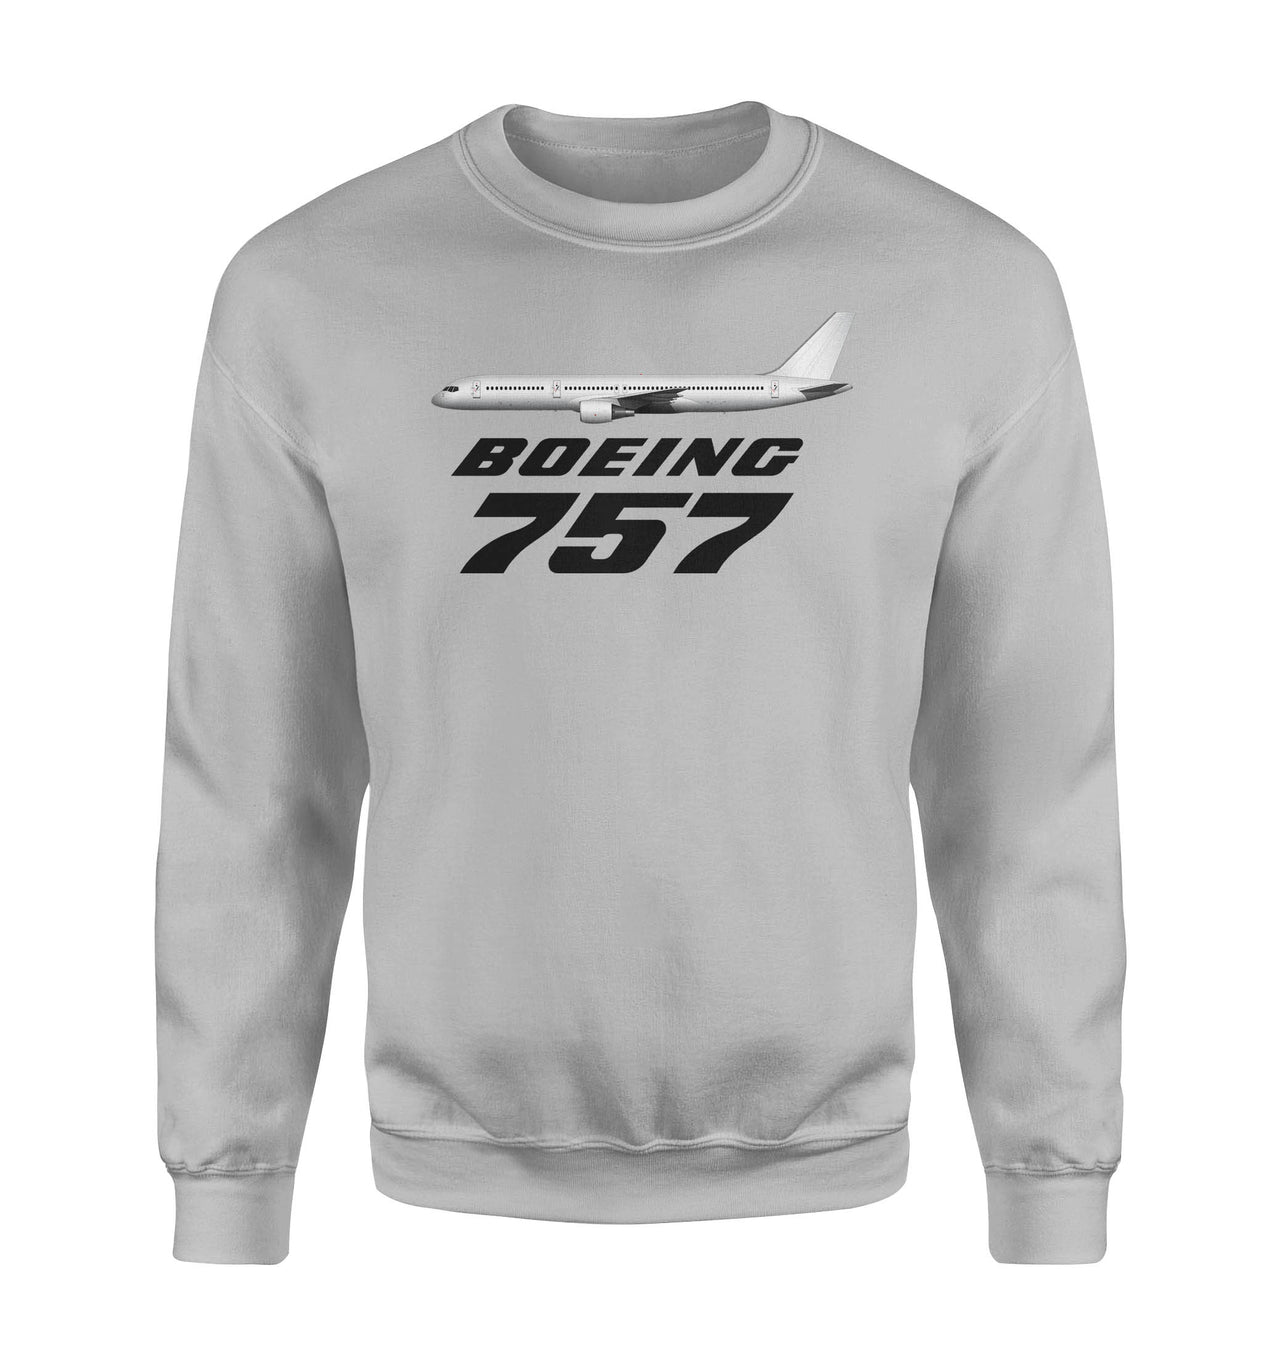 The Boeing 757 Designed Sweatshirts